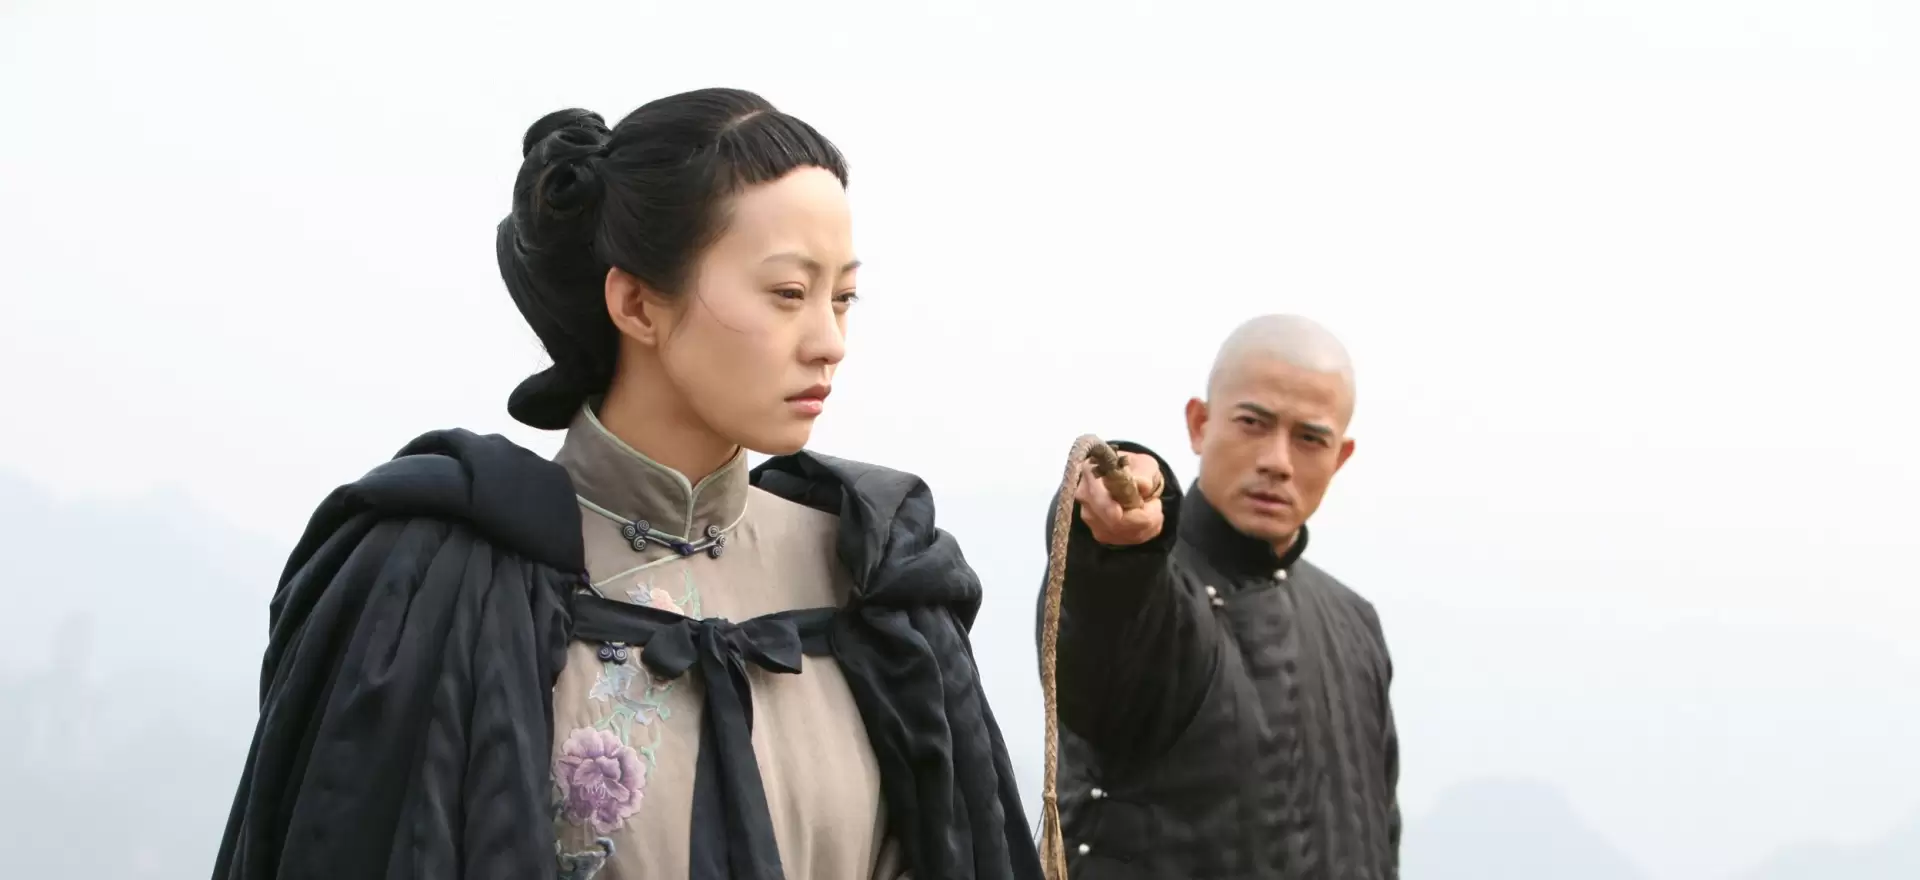 دانلود فیلم Bai yin di guo 2009